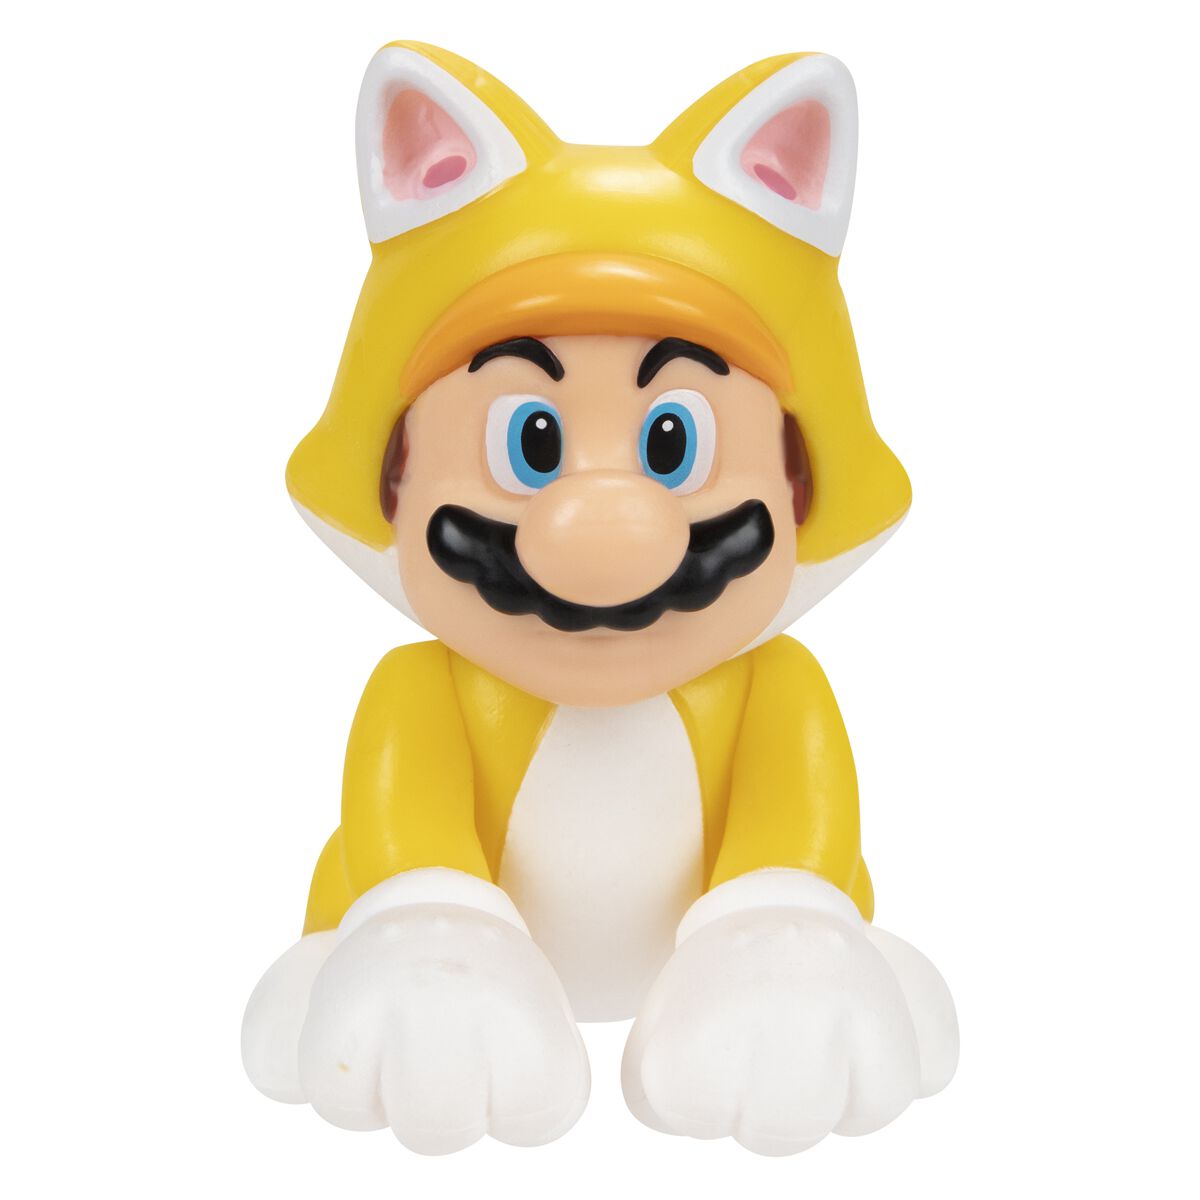 Figurine de collection Gaming de Super Mario - Chat Mario - pour Unisexe - multicolore product